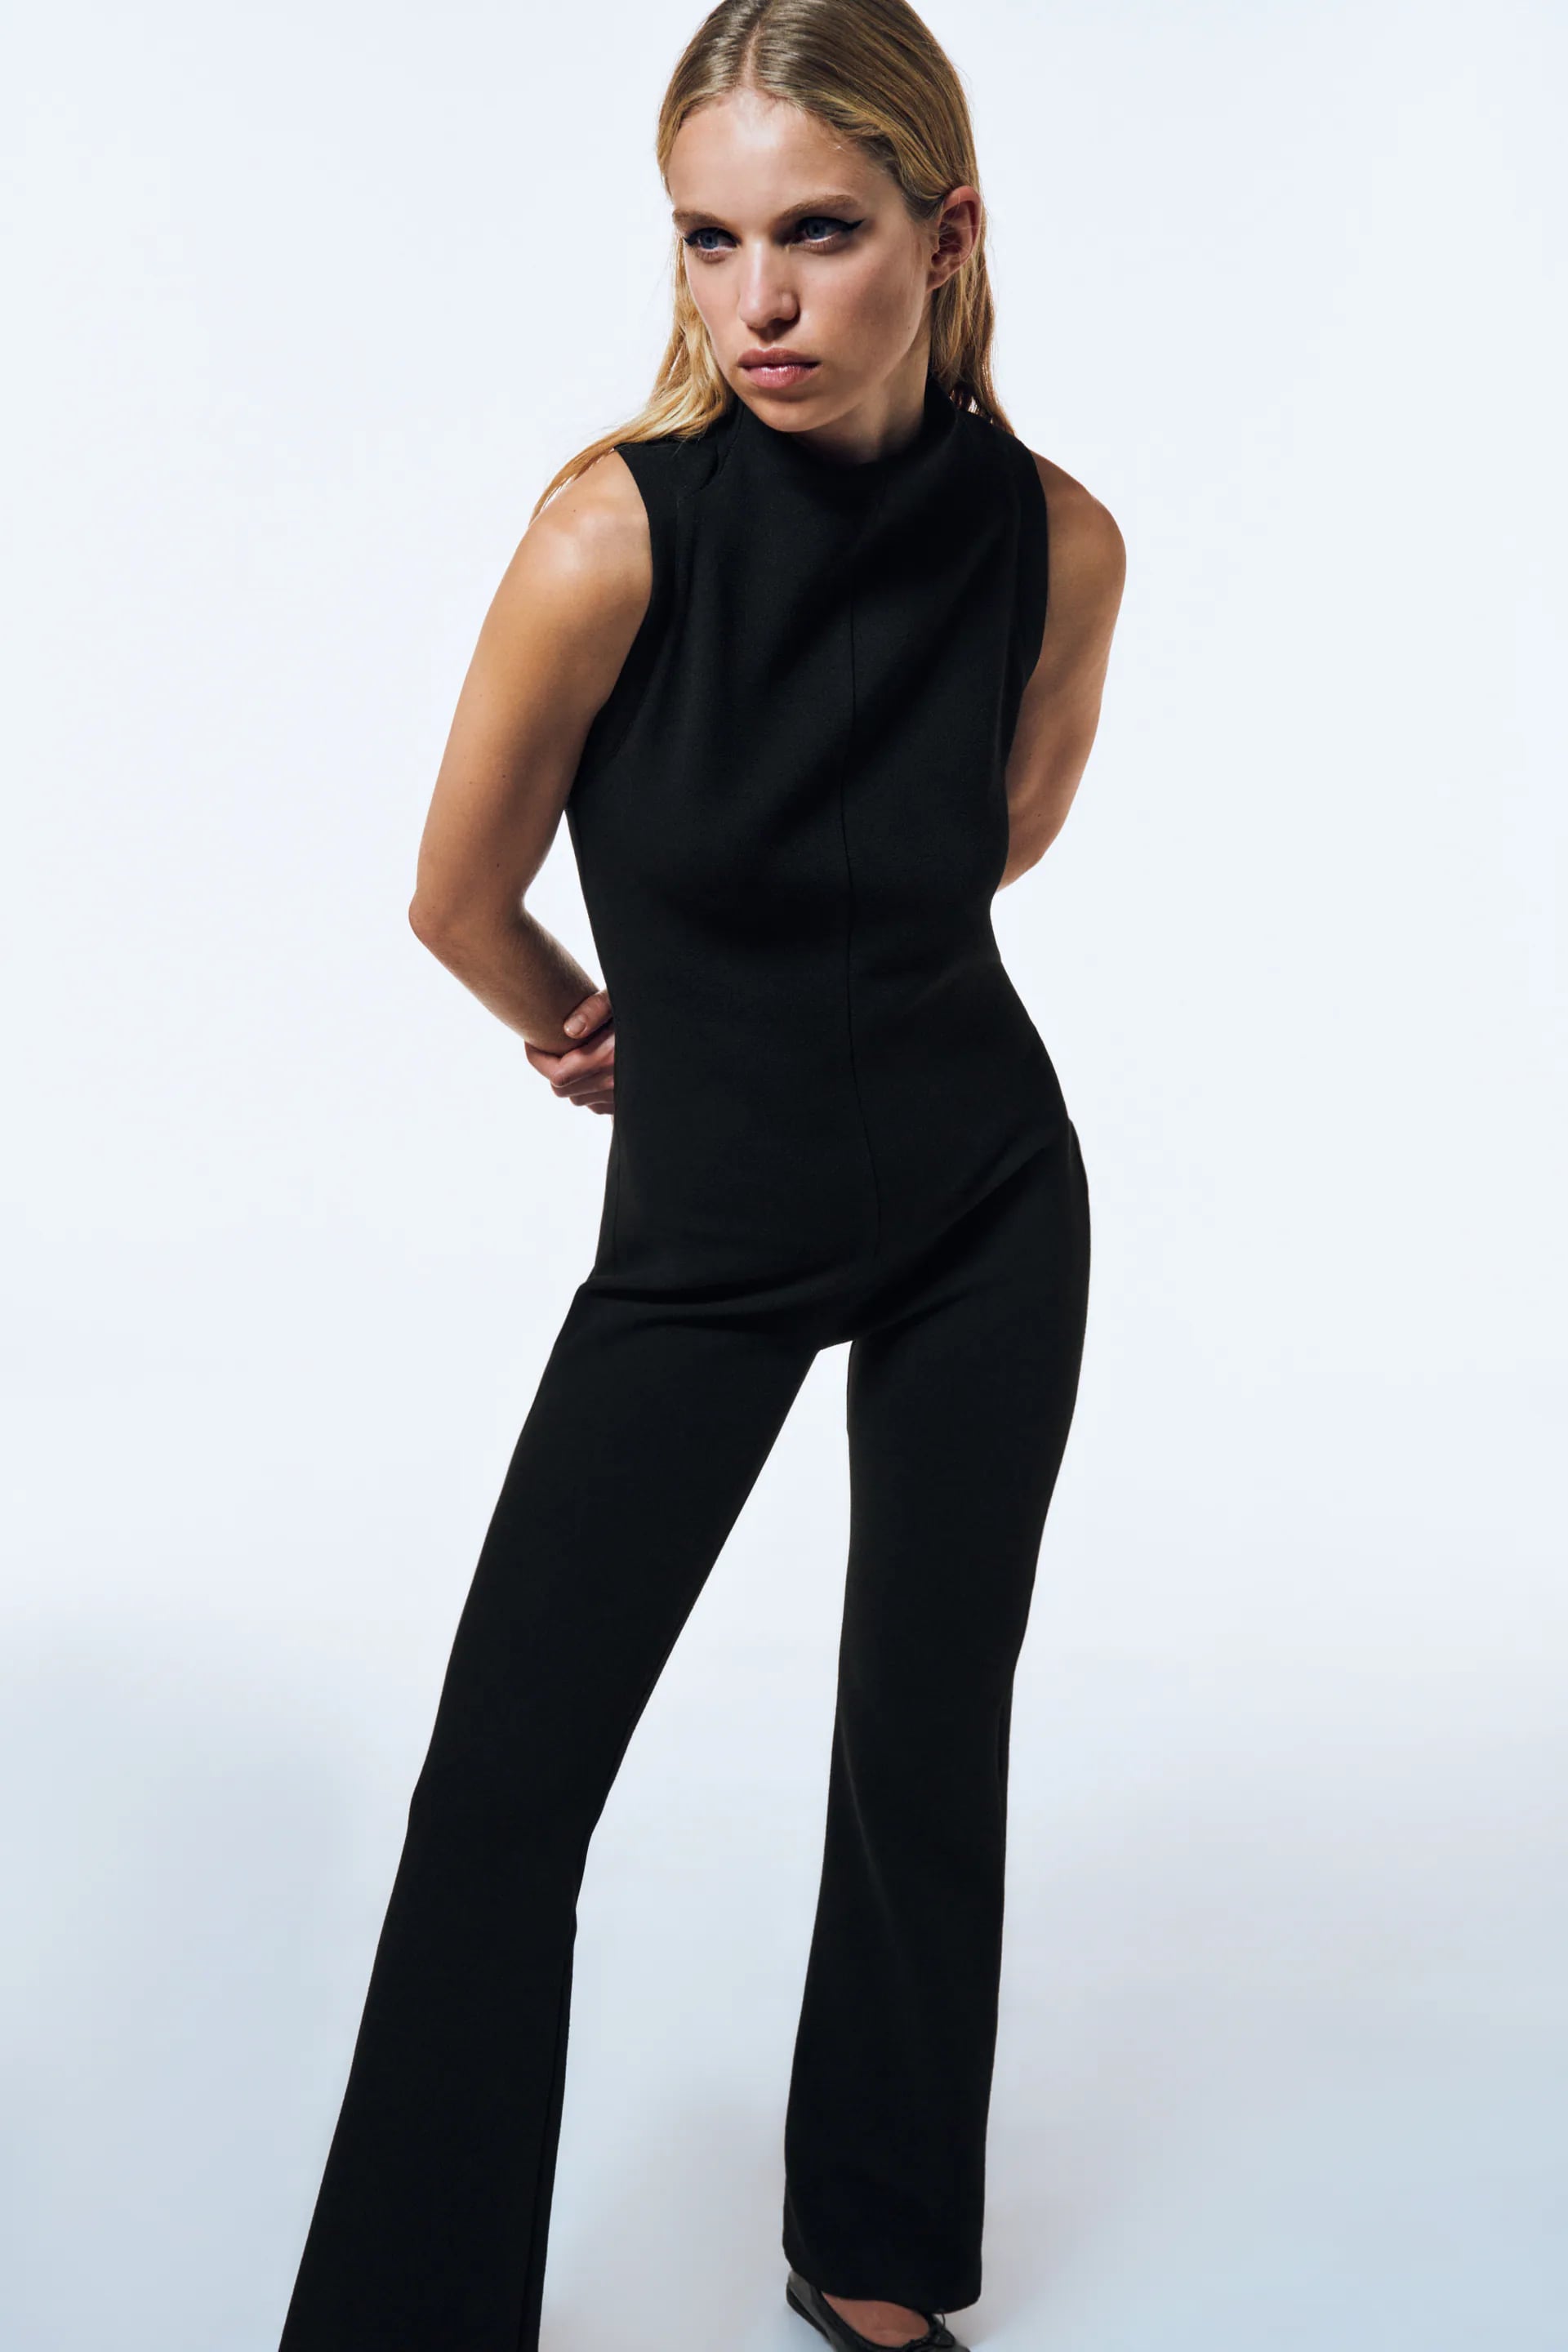 Look of the Week: Black Zara Jumpsuit - White Collar Glam